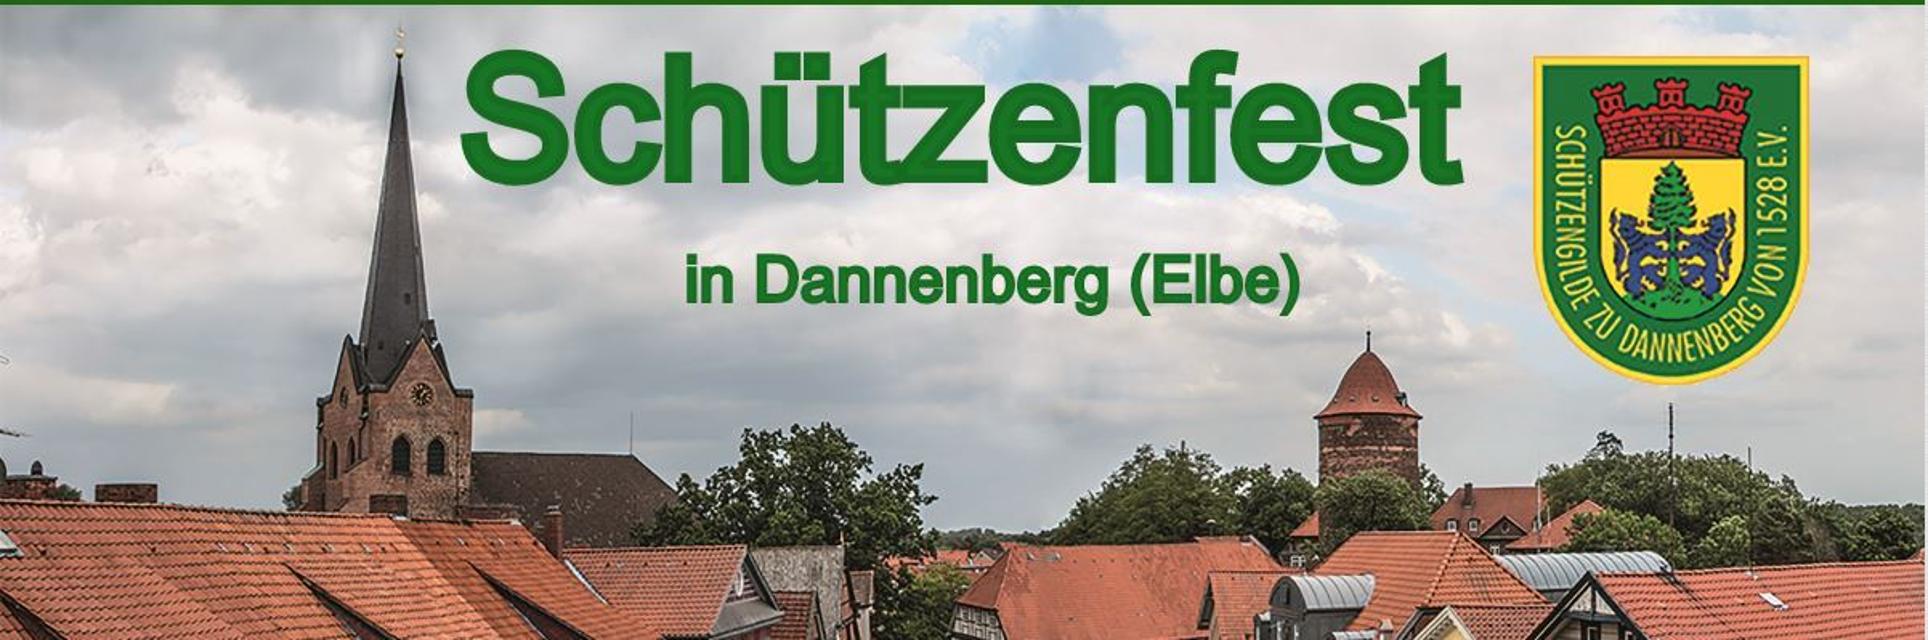 Schützenfest Dannenberg (Elbe) 